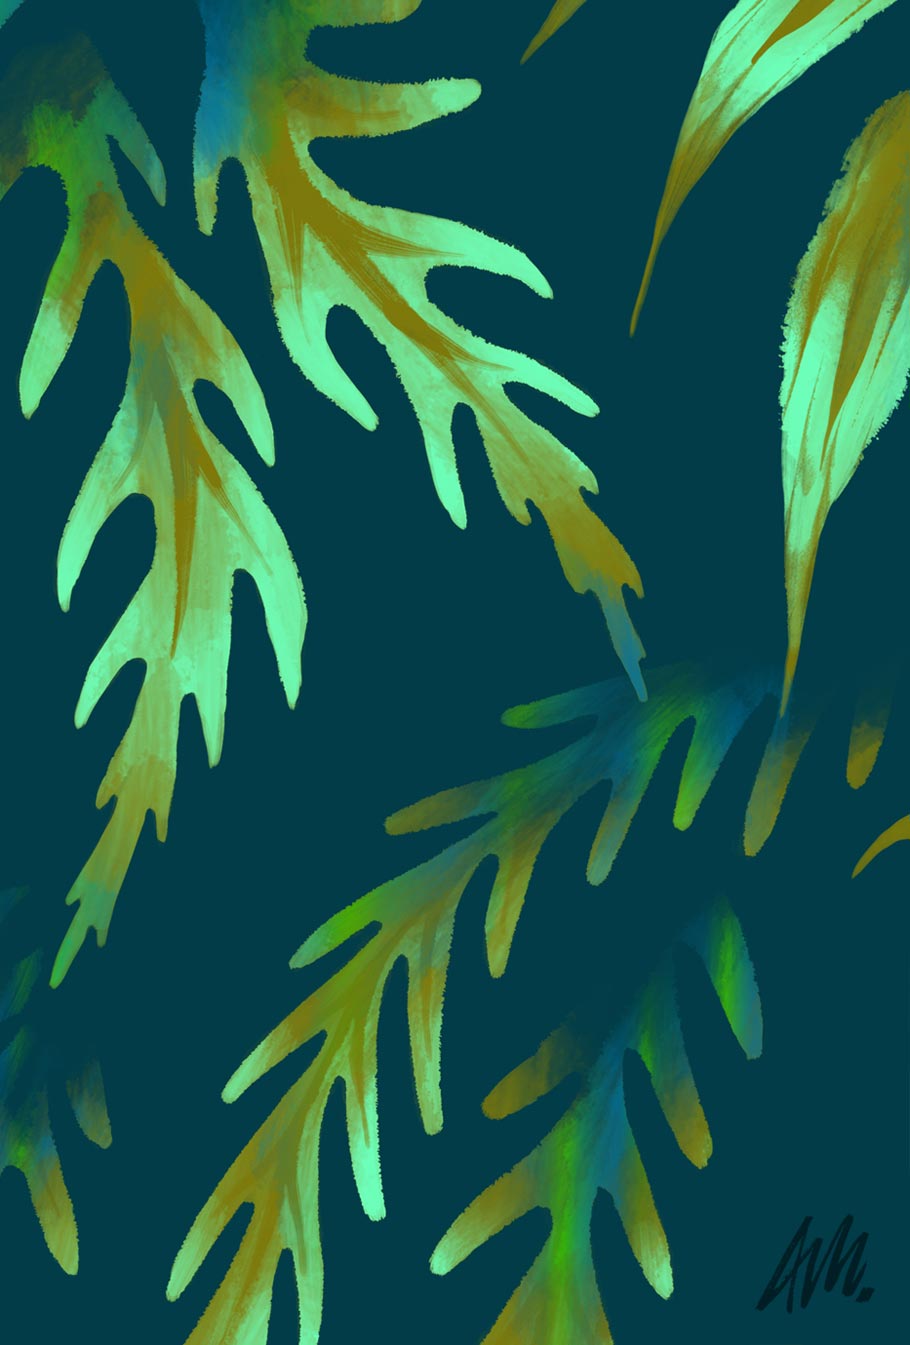 Fern leaf print pattern green by Andrea Muller